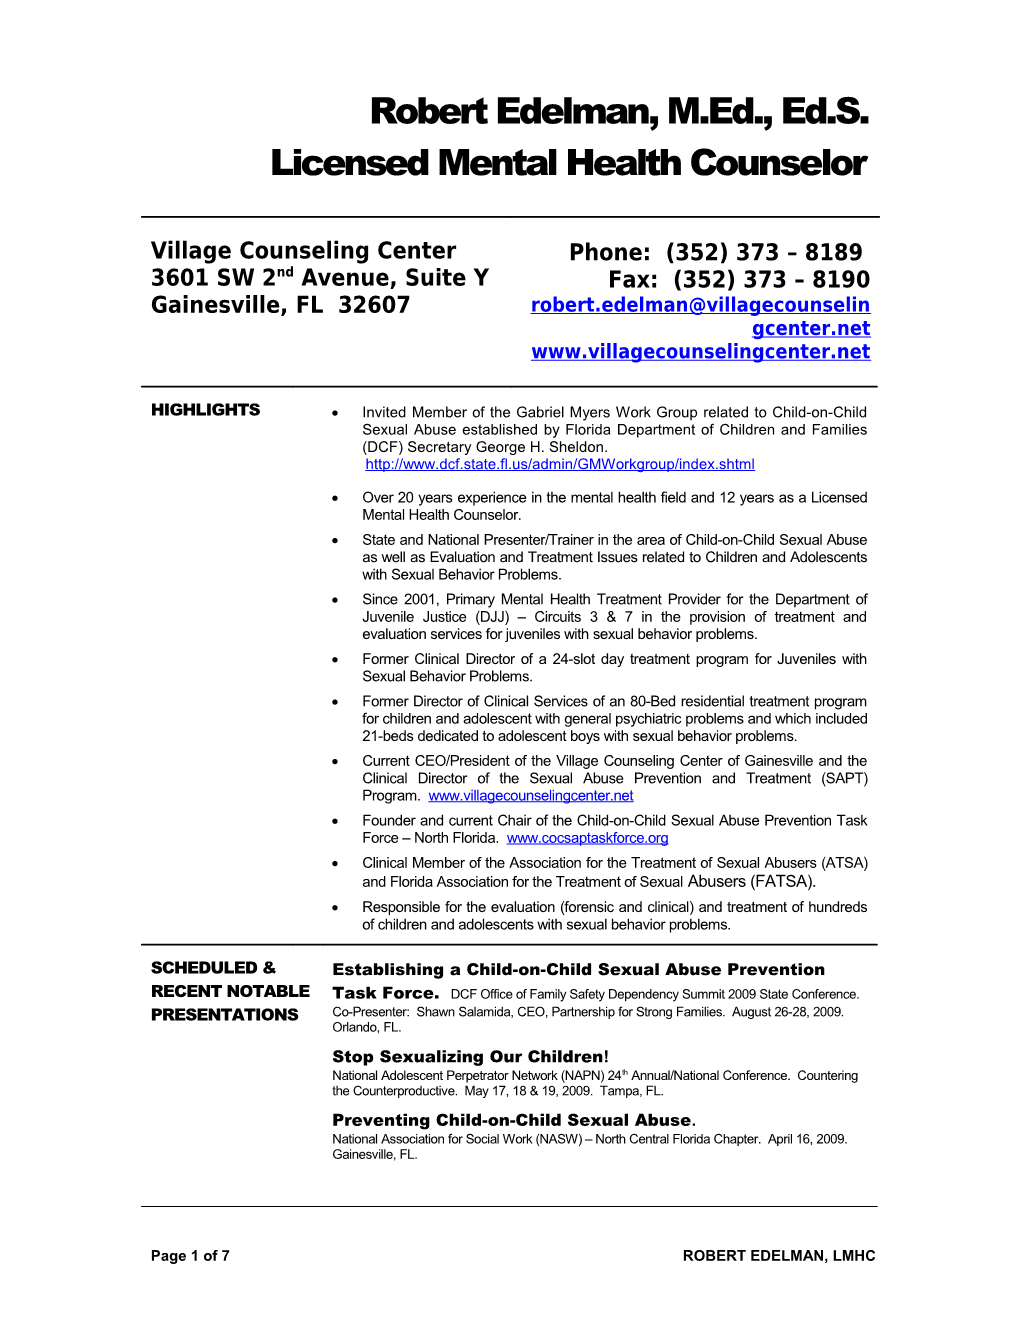 Robert Edelman, M.Ed., Ed.S. Licensed Mental Health Counselor